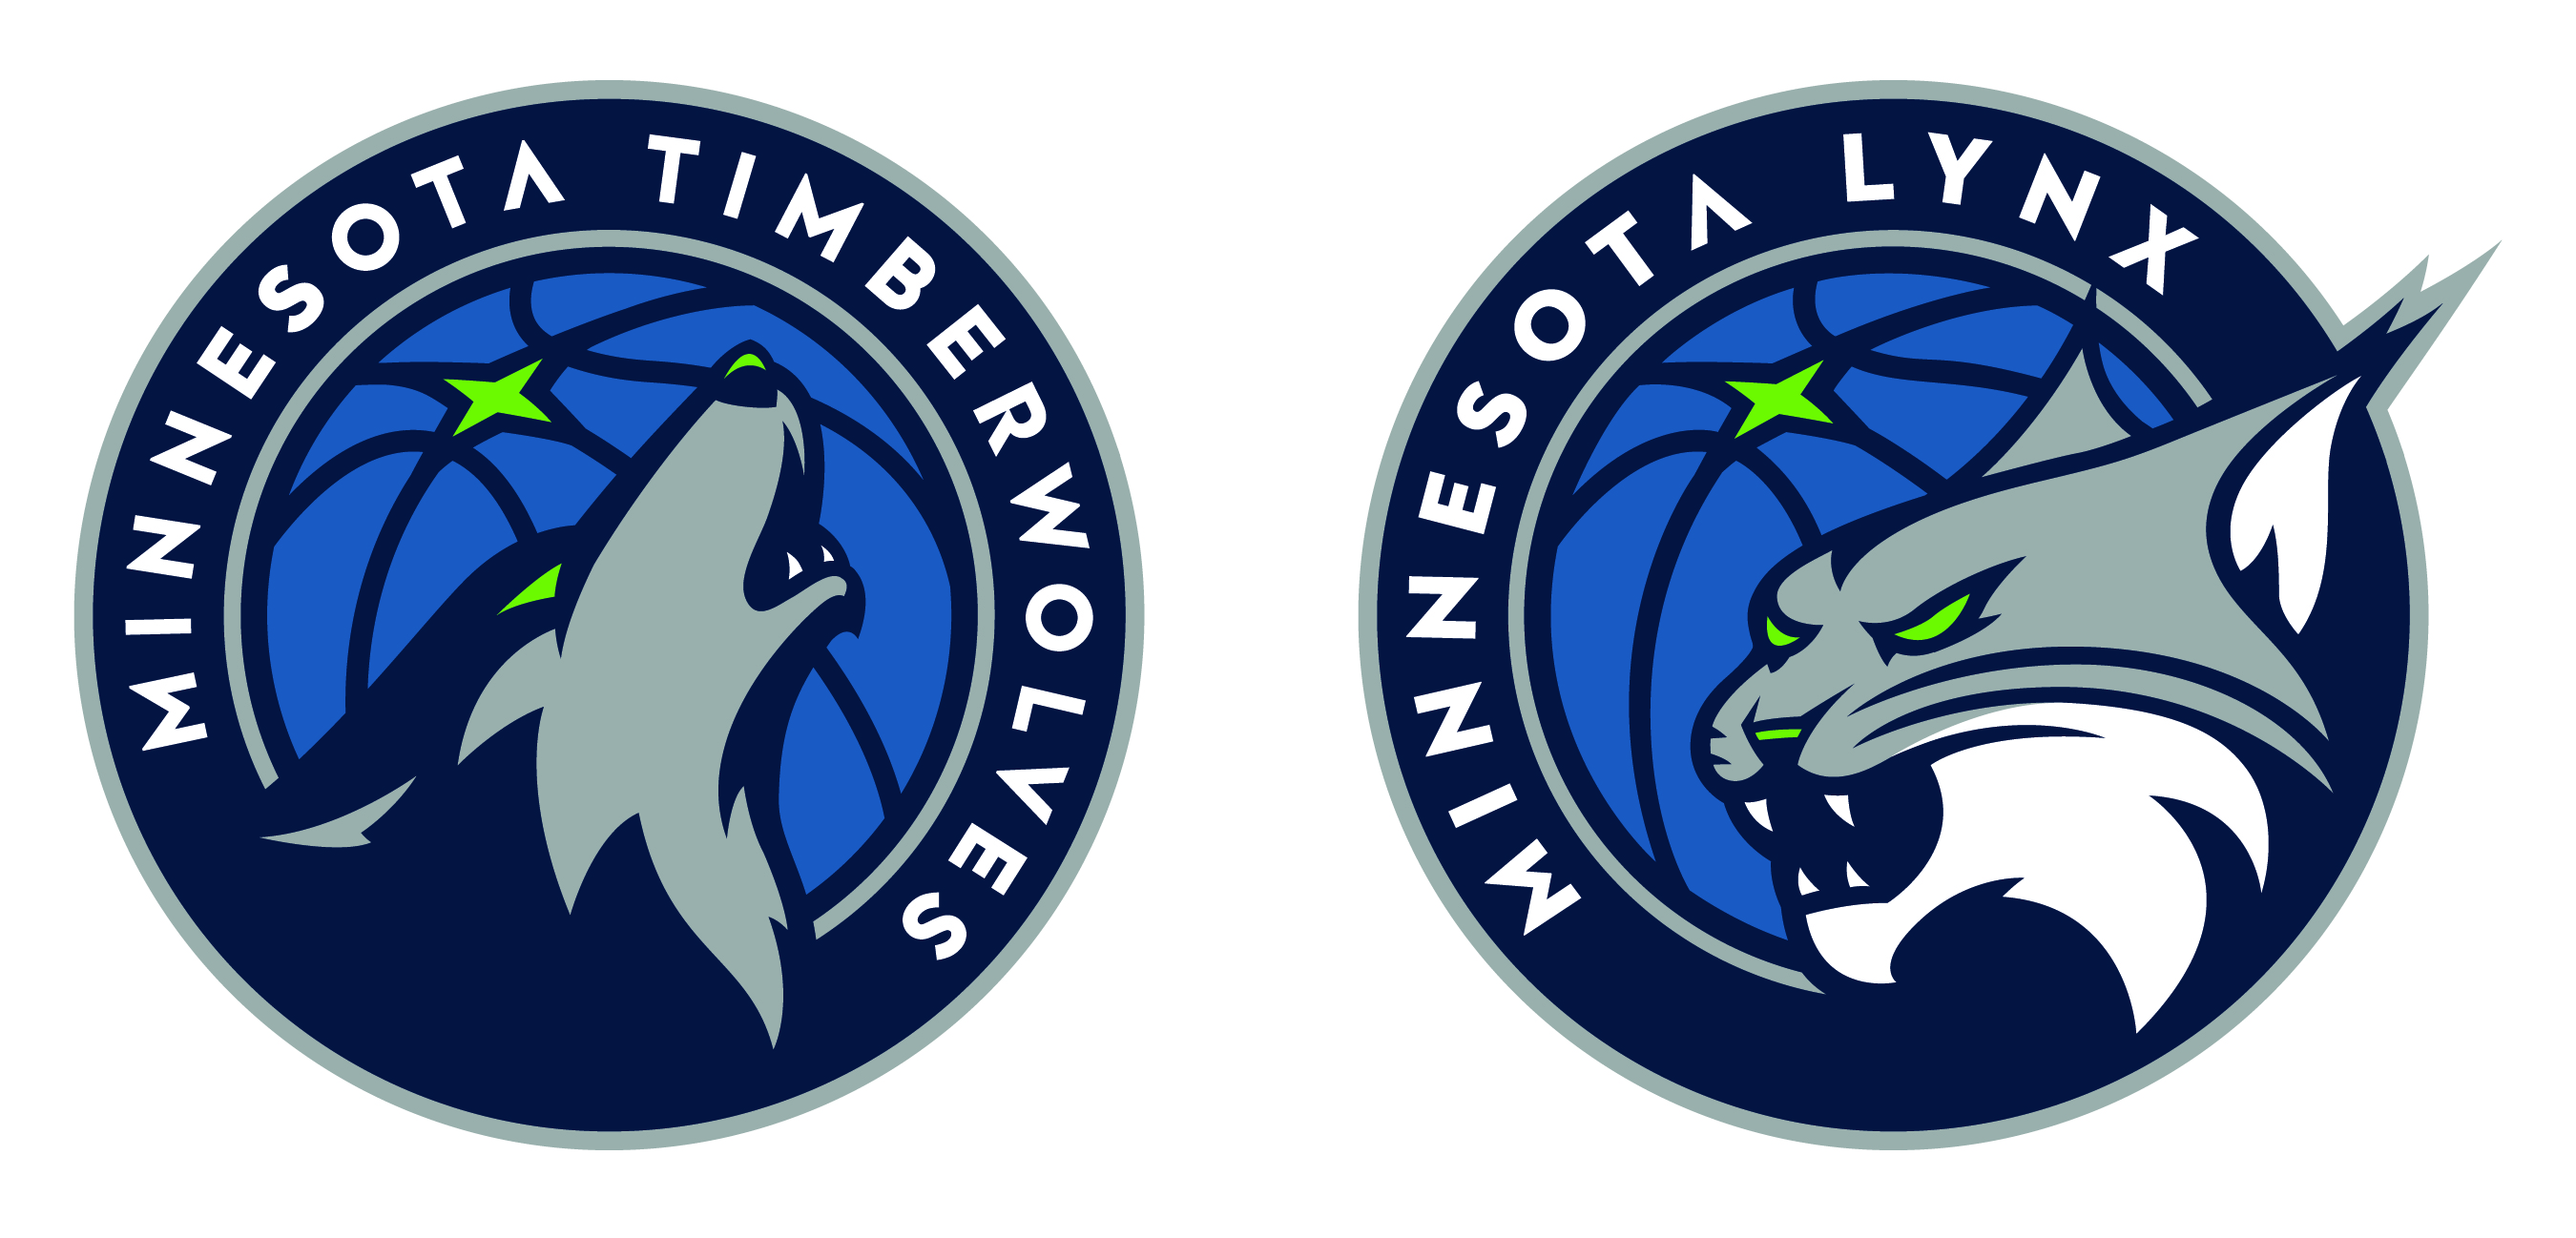 Logos of Minnesota Timberwolves and Minnesota Lynx